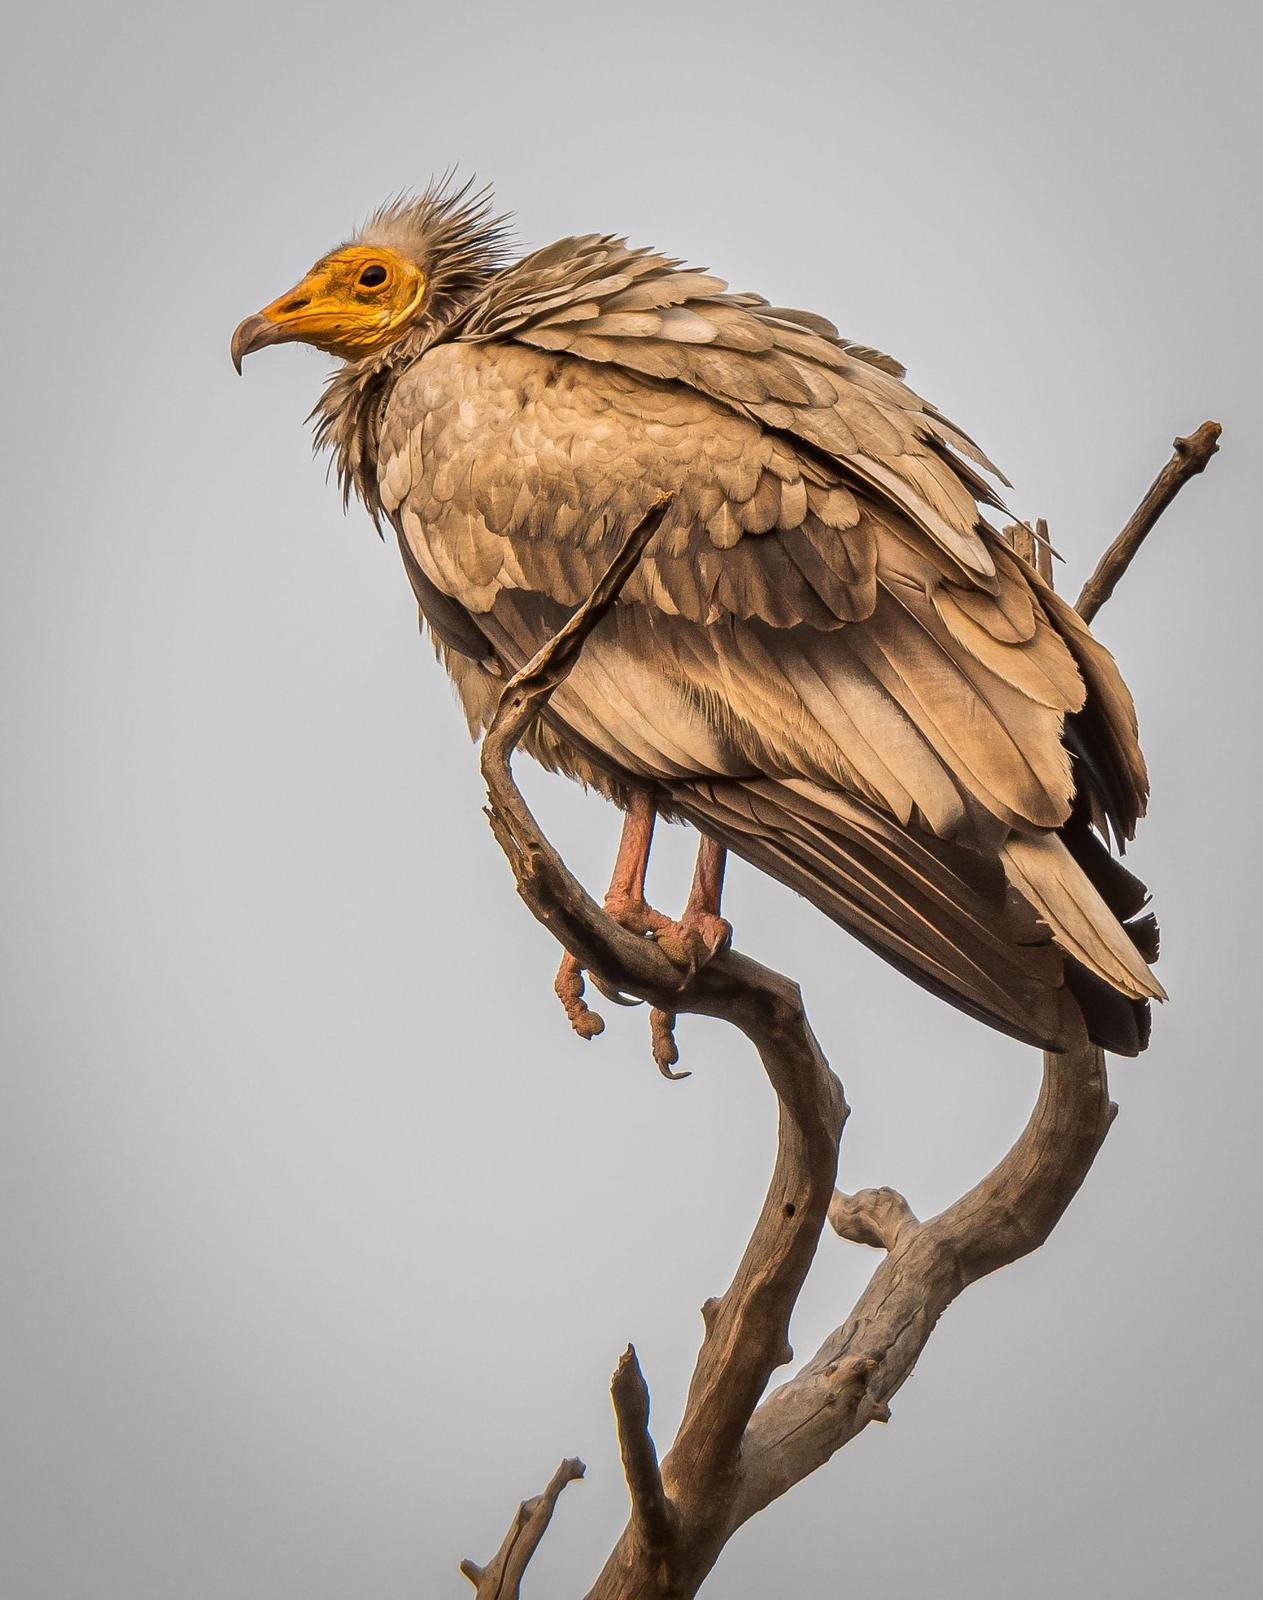 Egyptian Vulture Photo by Kishore Bhargava